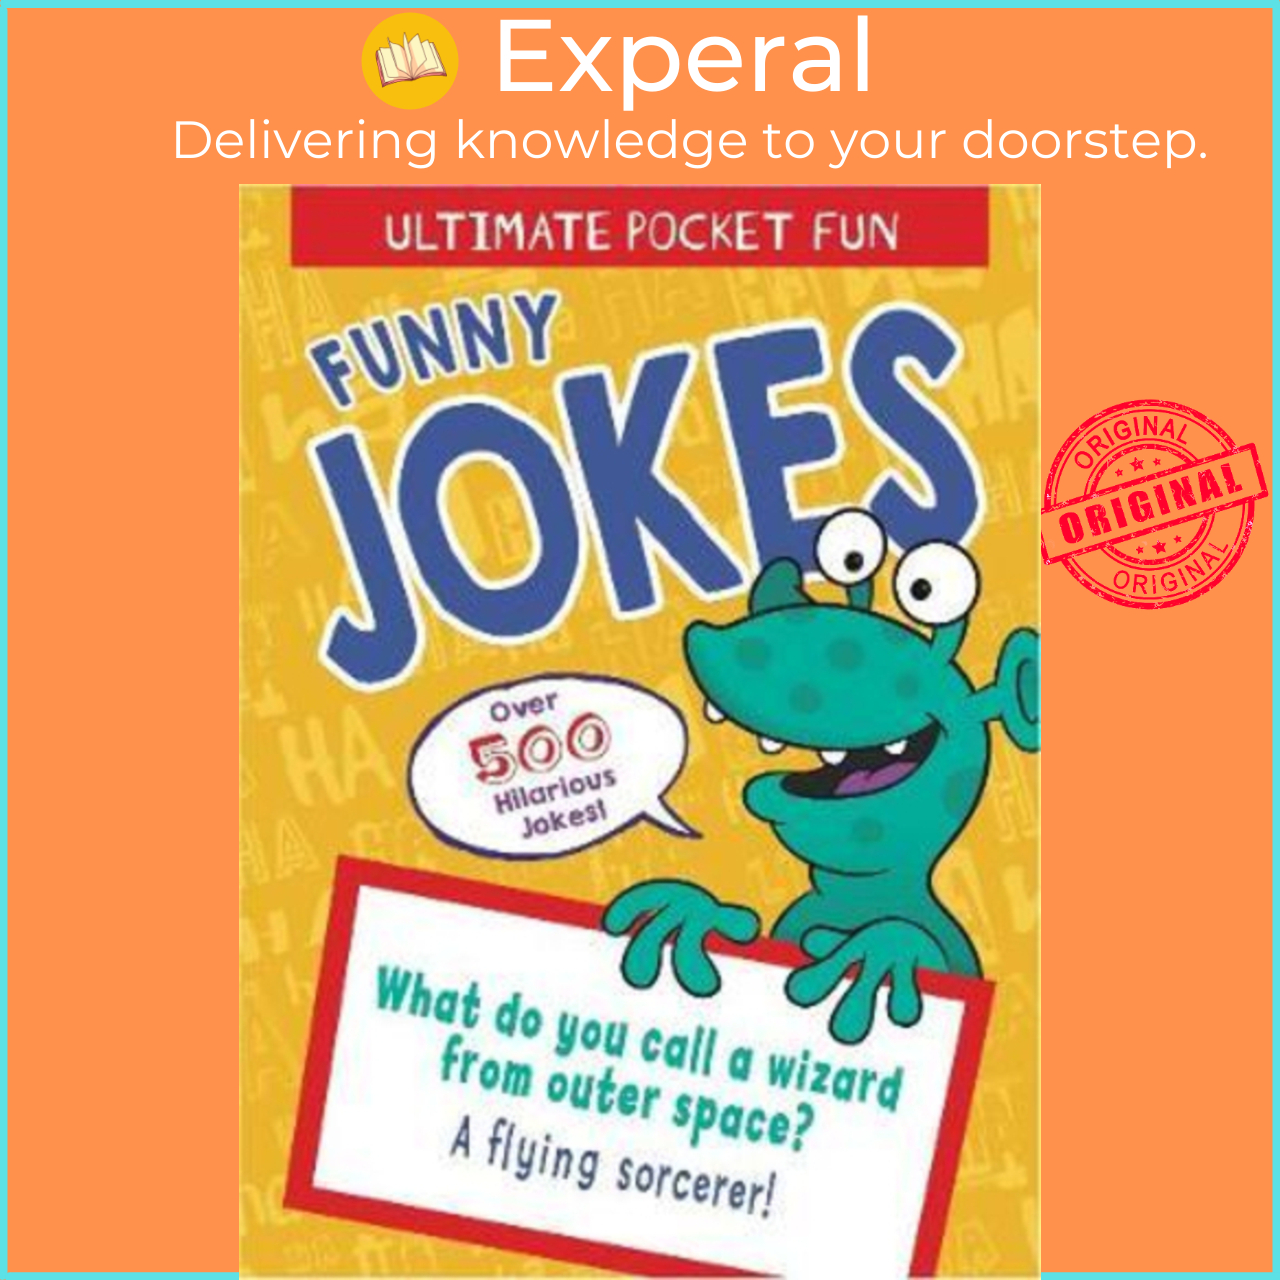 Ultimate Pocket Fun: Funny Jokes : Over 500 Hilarious Jokes by Jack B.  Quick (UK edition, paperback) | Lazada Singapore